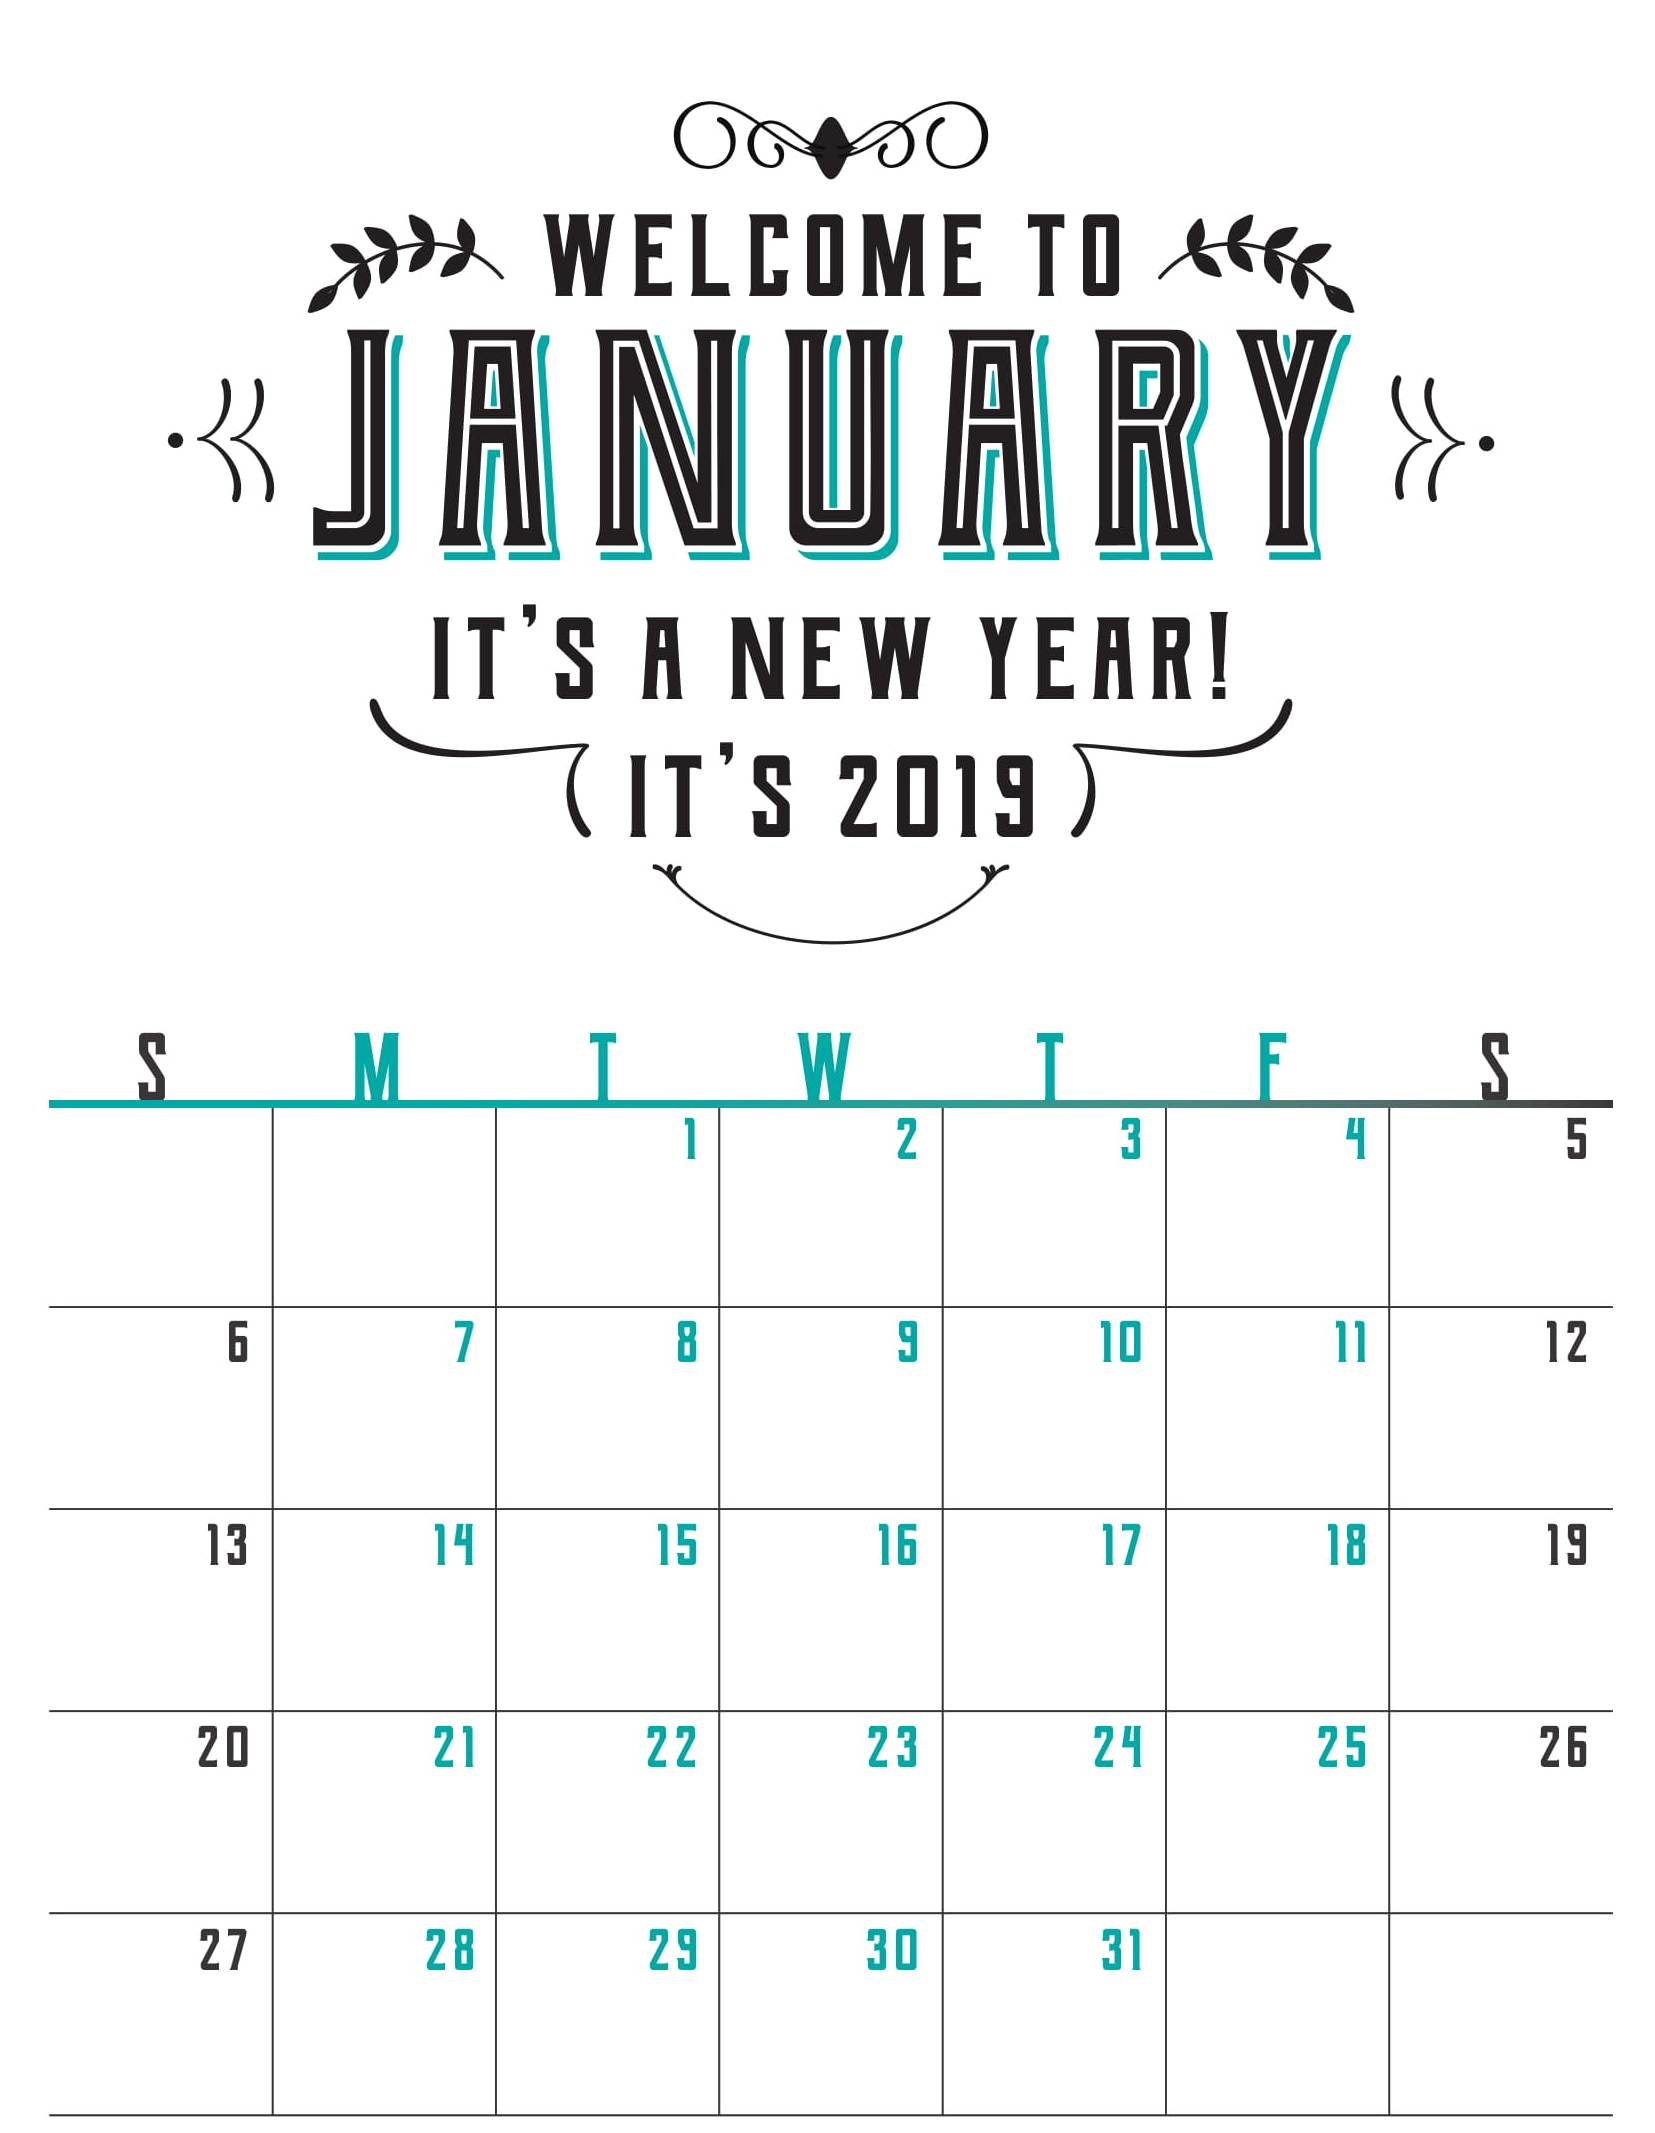 Blank January 2020 Calendar Printable Sheet Word - Set Your